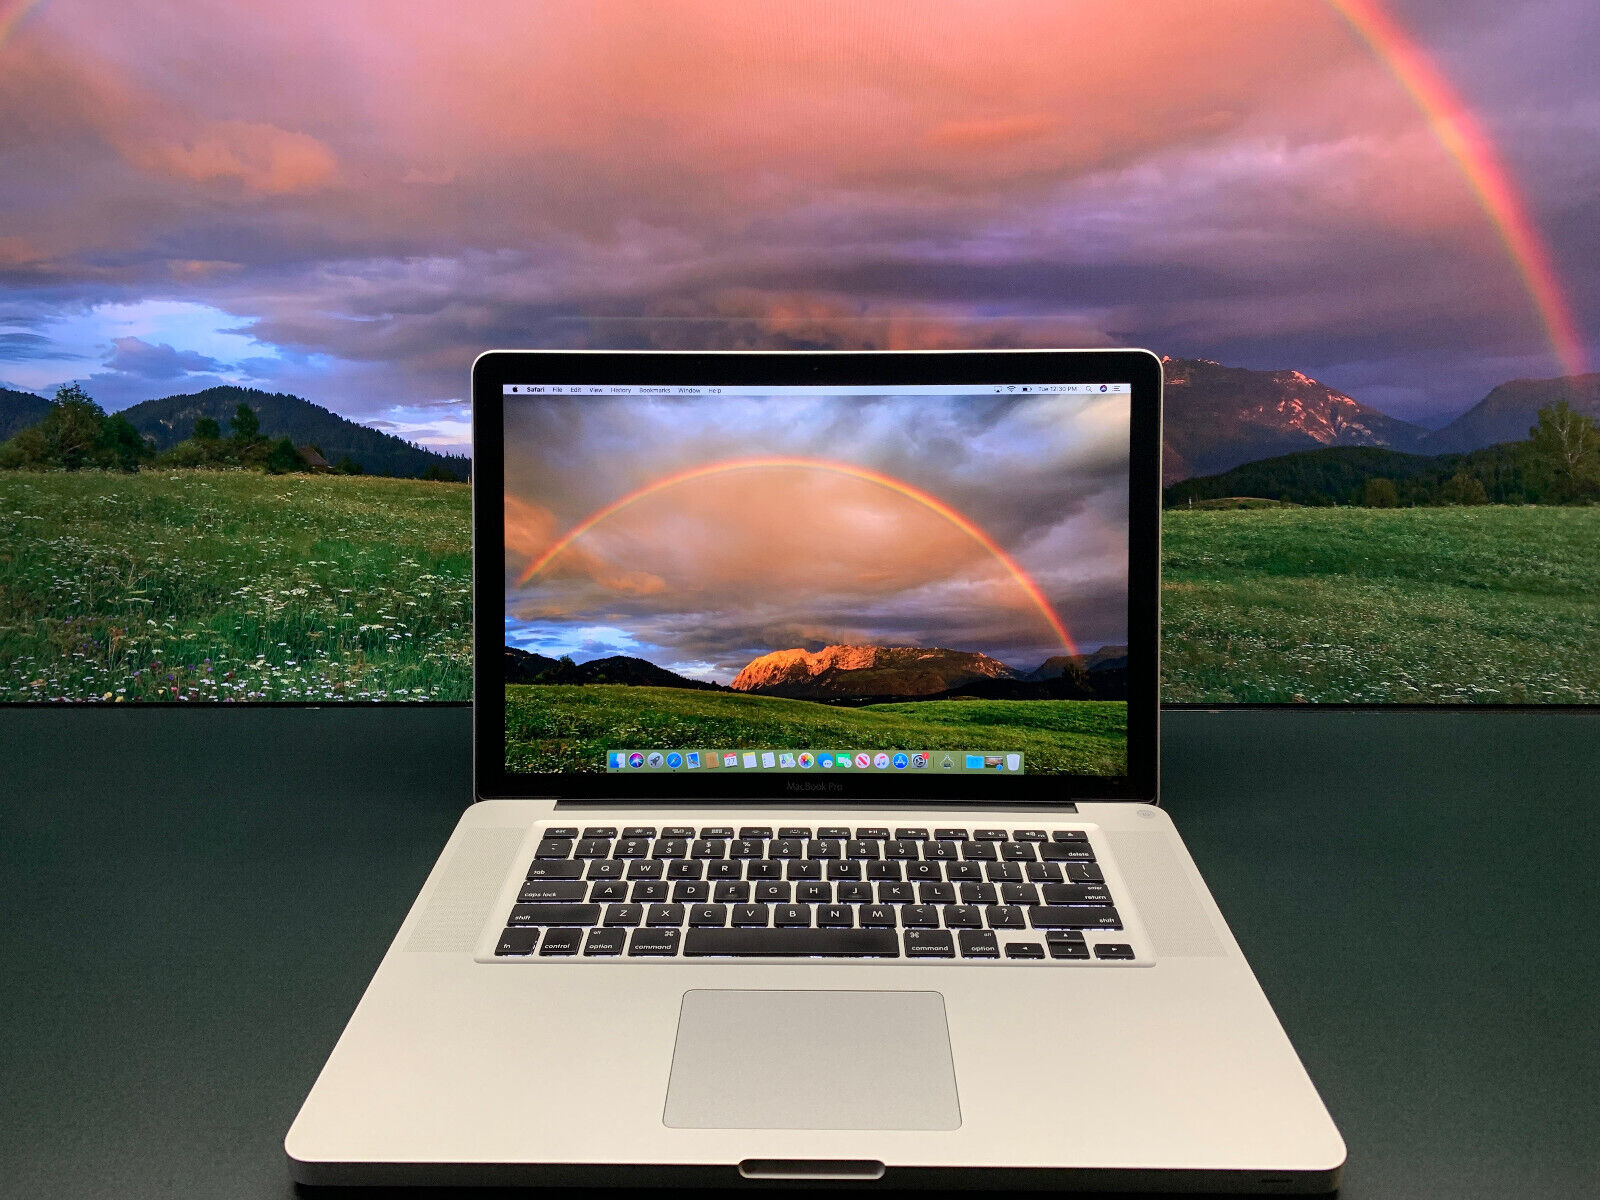 Apple MacBook Pro 15 inch Laptop / Quad Core i7 /  16GB RAM 1TB SSD / Warranty /